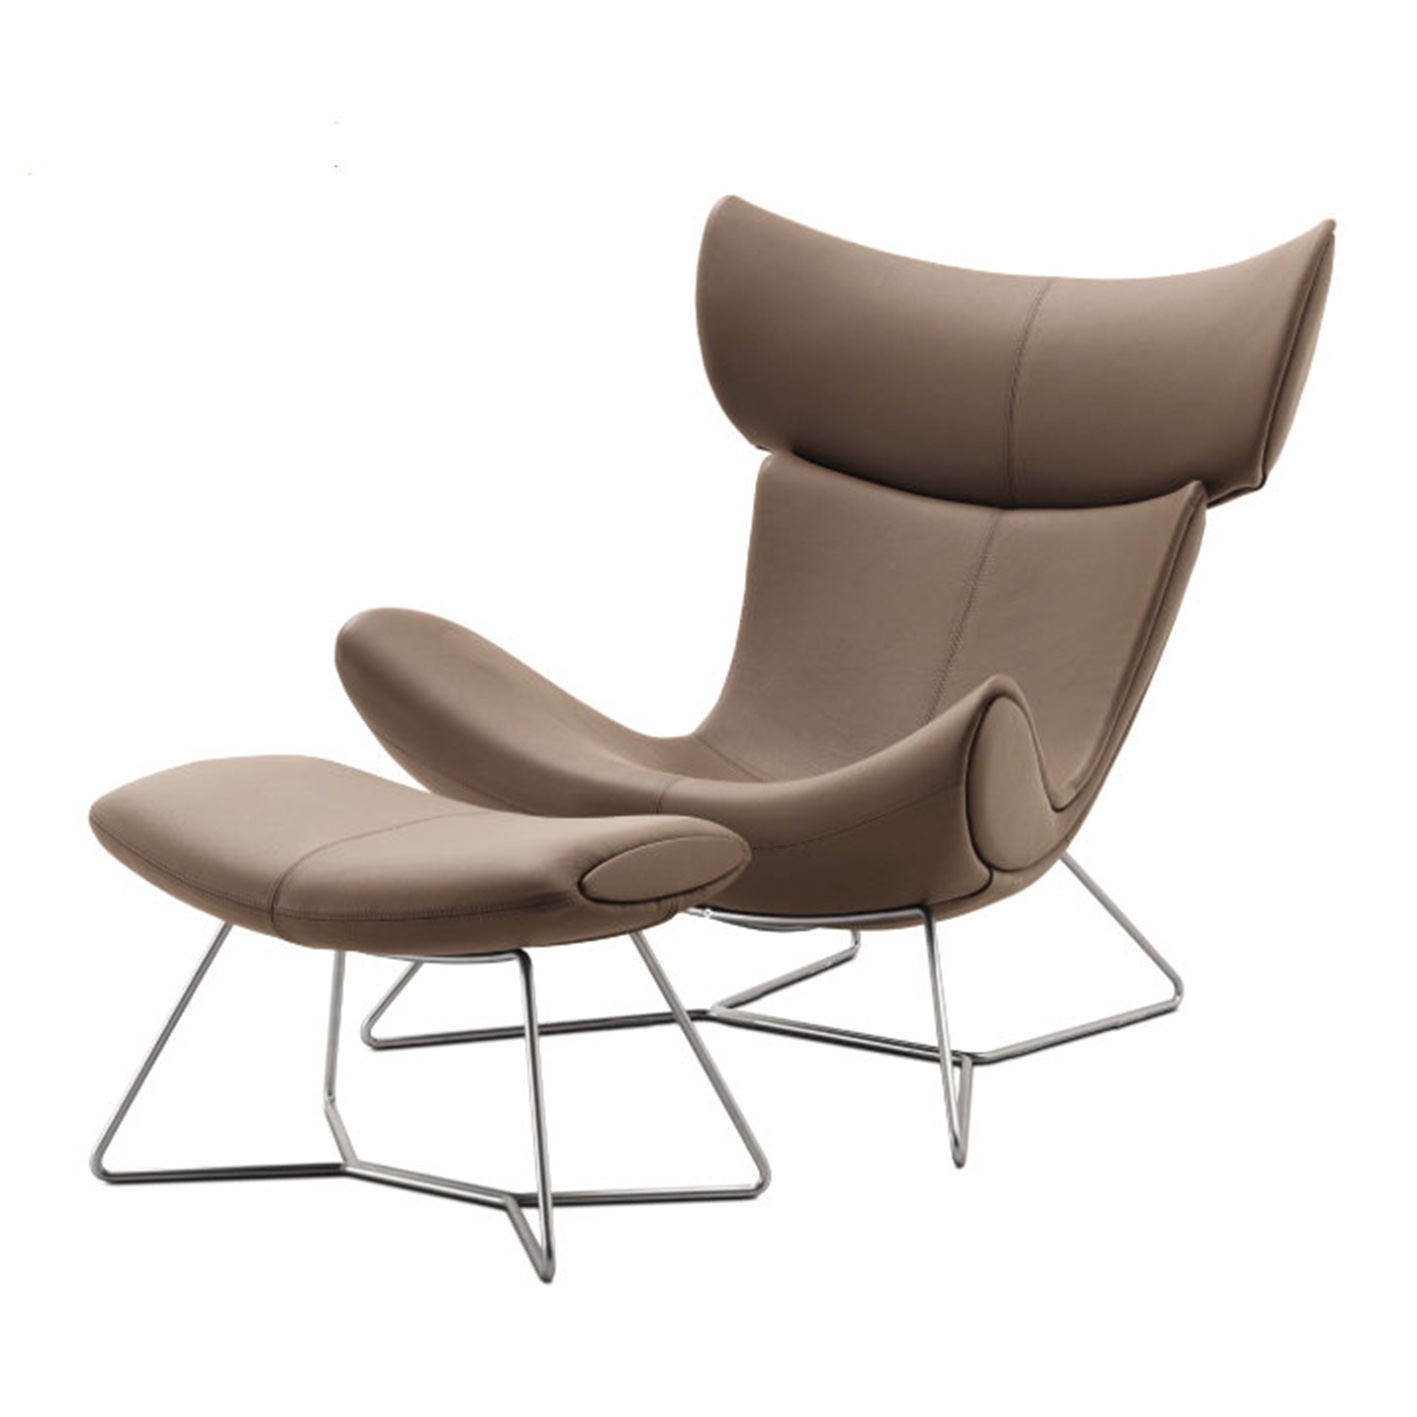 salon lounge leisure chair with ottoman designs manufacturer